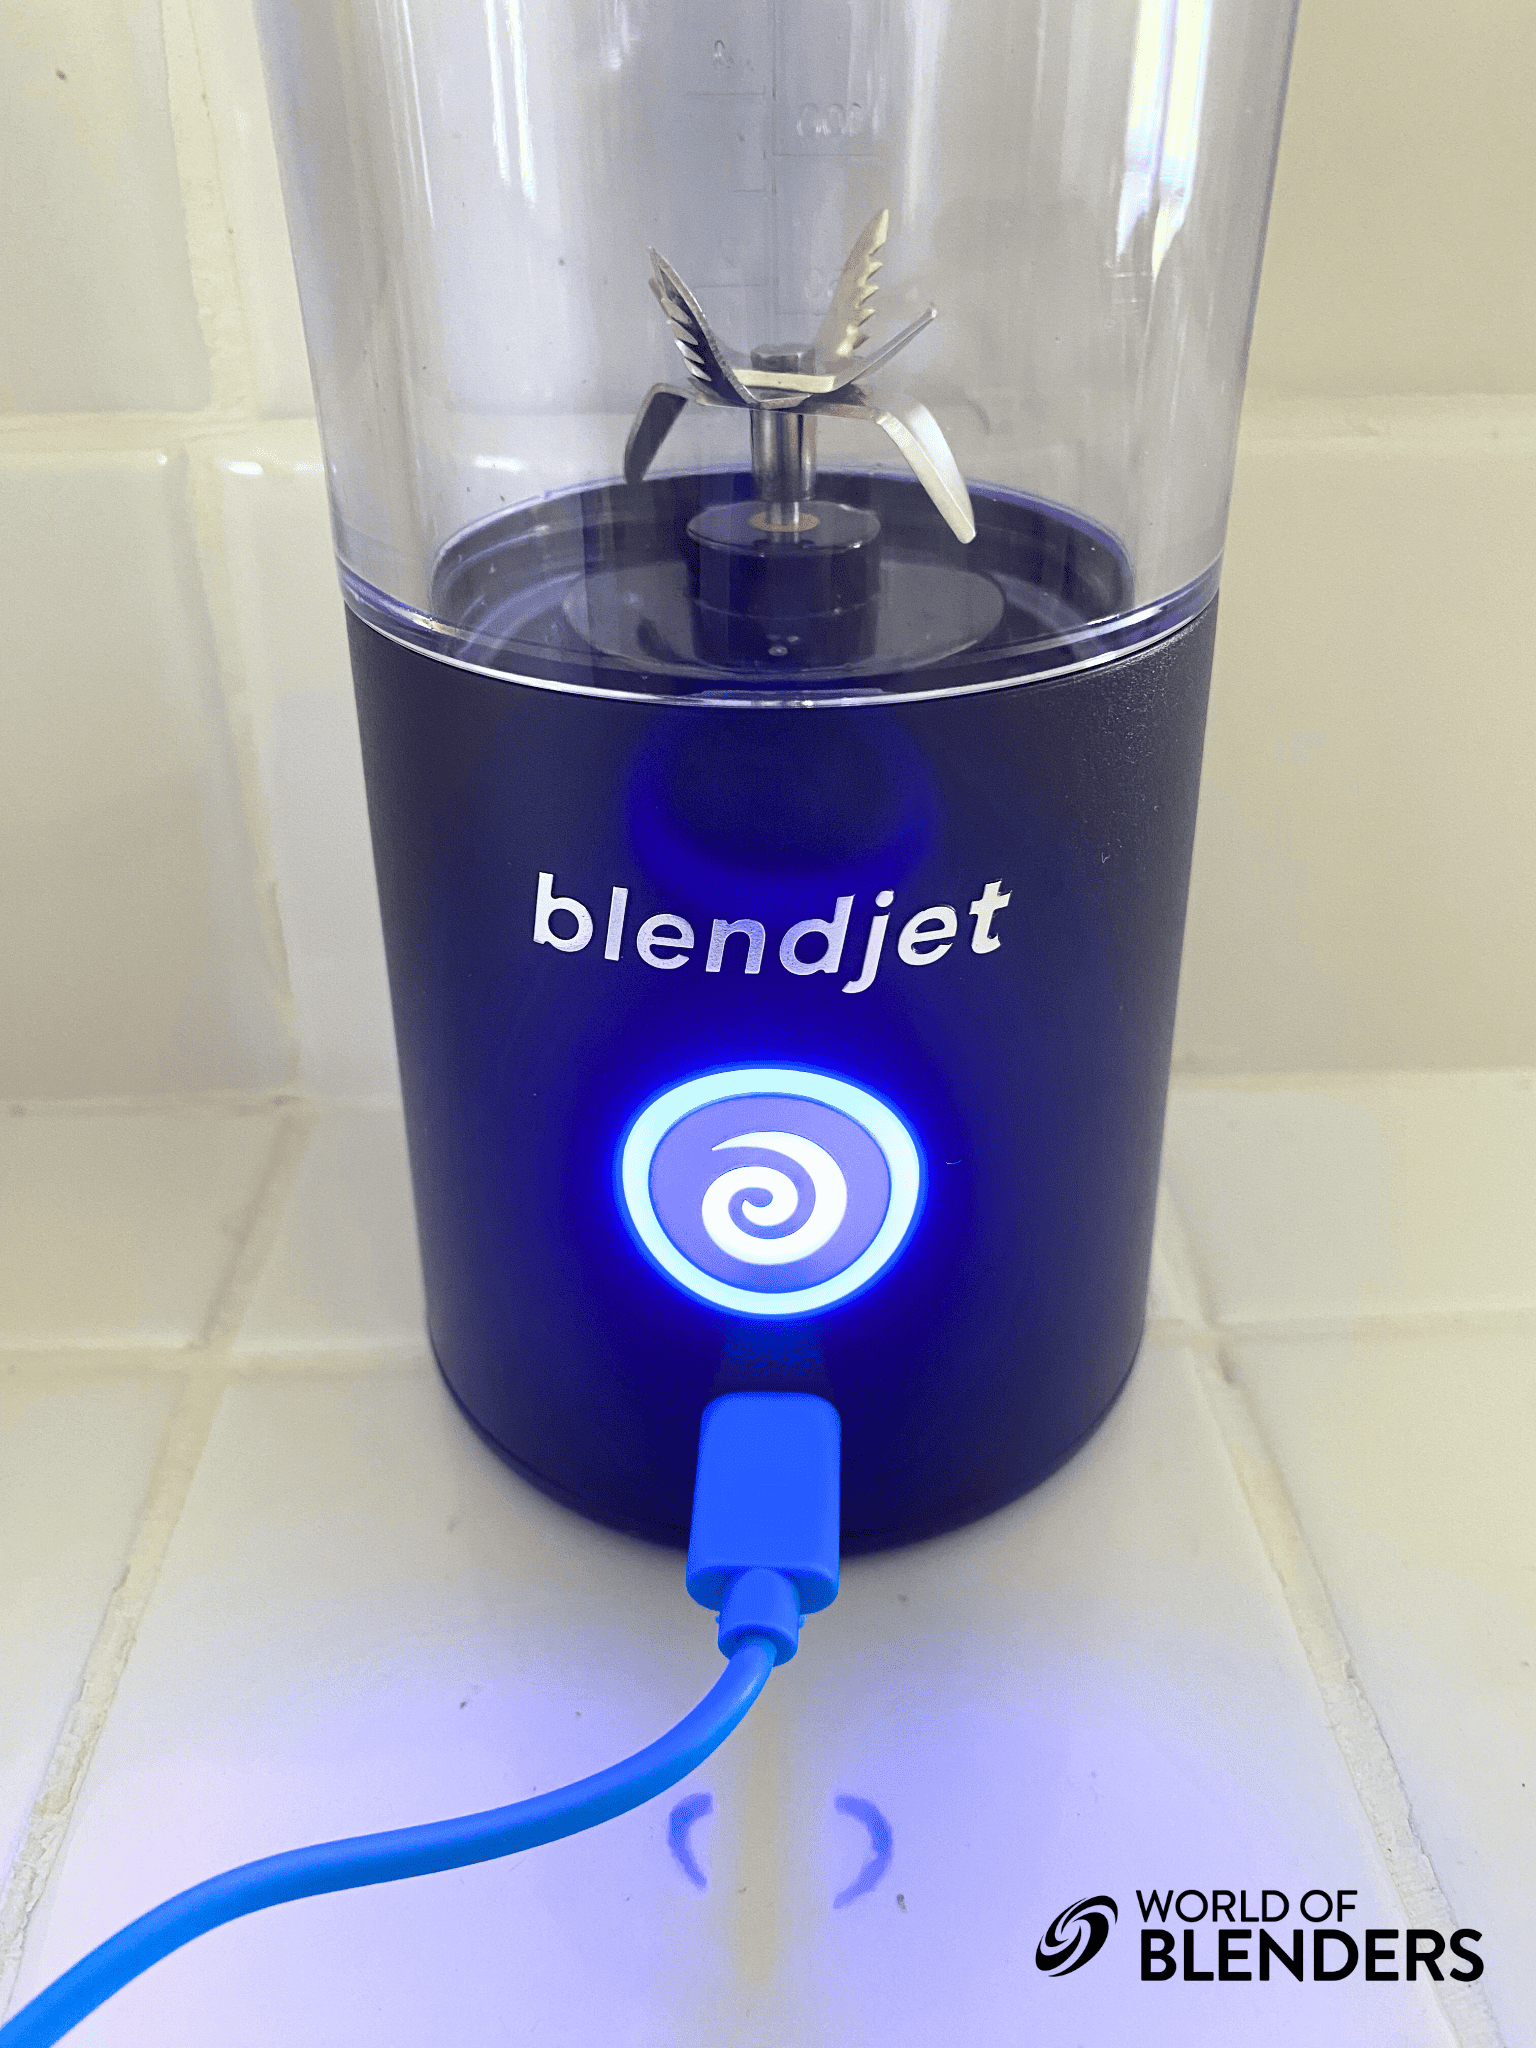 charging blendjet